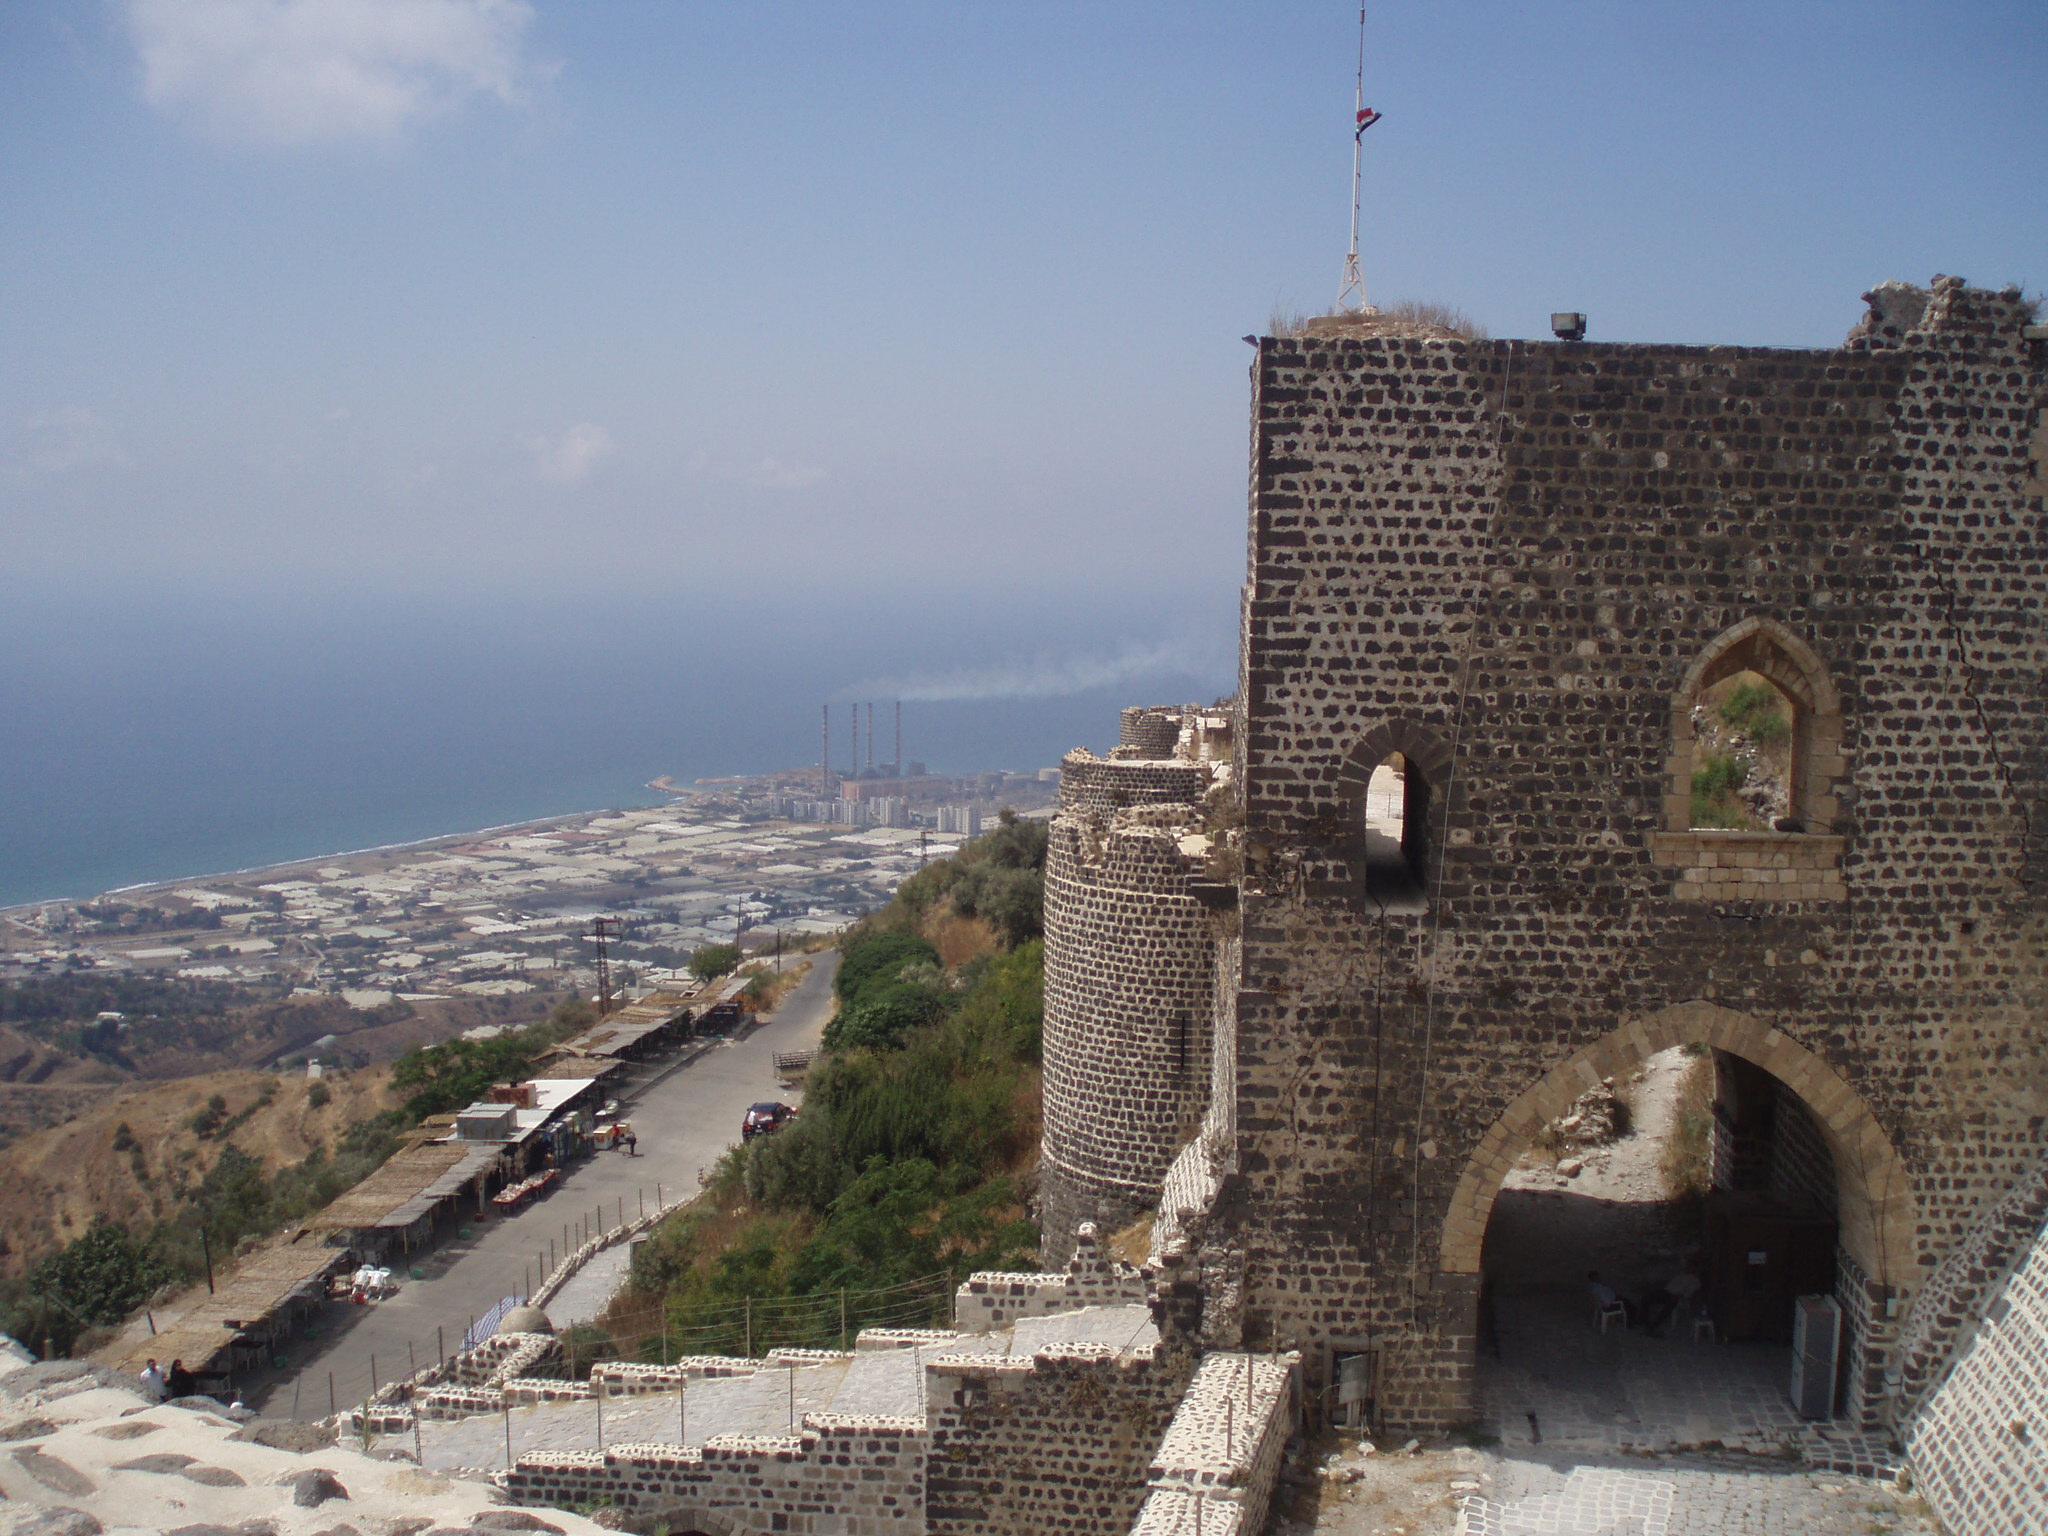 The black basalt walls of Marqab Crusader Castle, overlooking the Mediterranean.